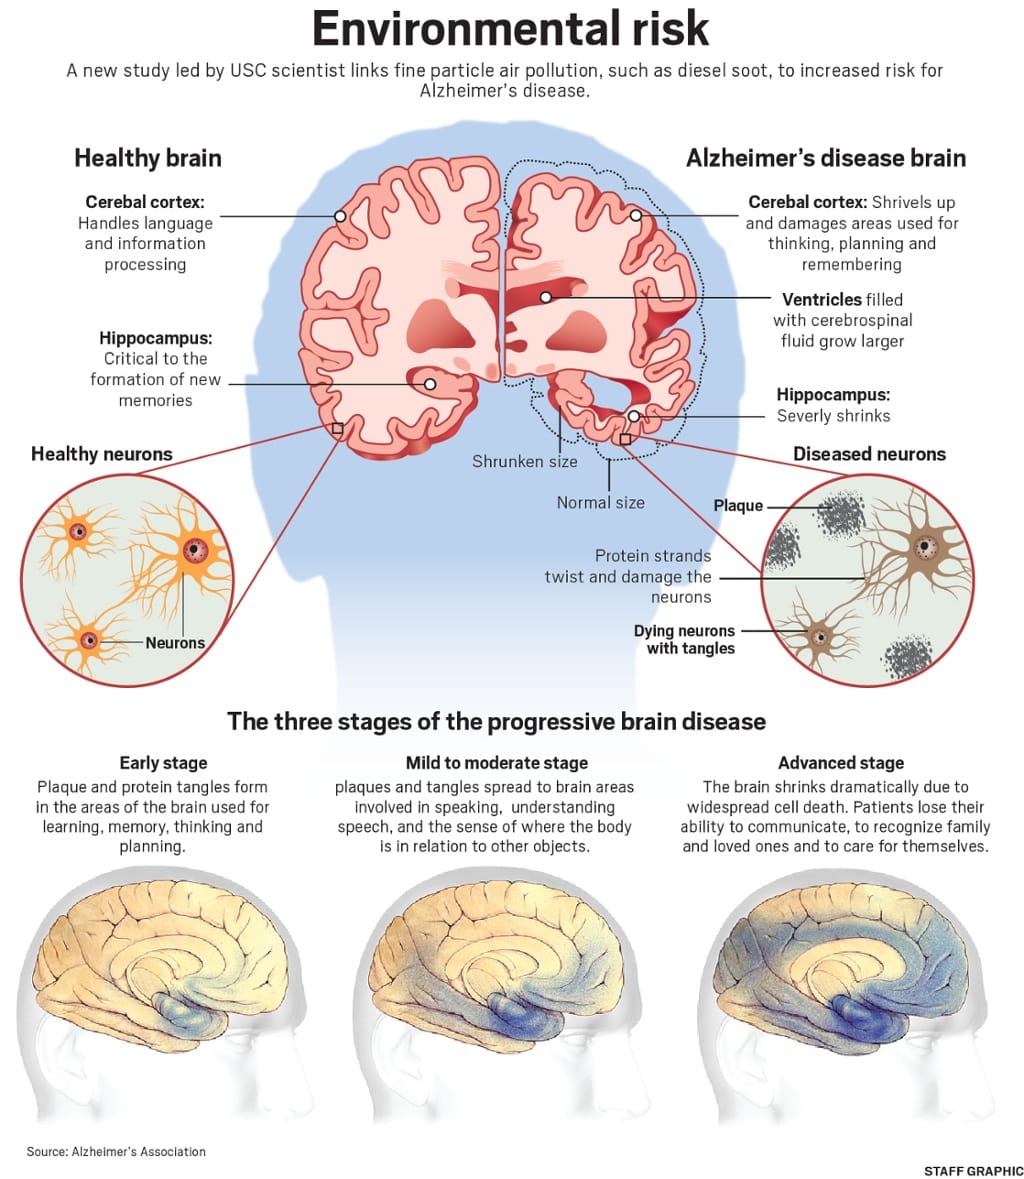 Alzheimerâs disease: Causes, Symptoms, Treatment